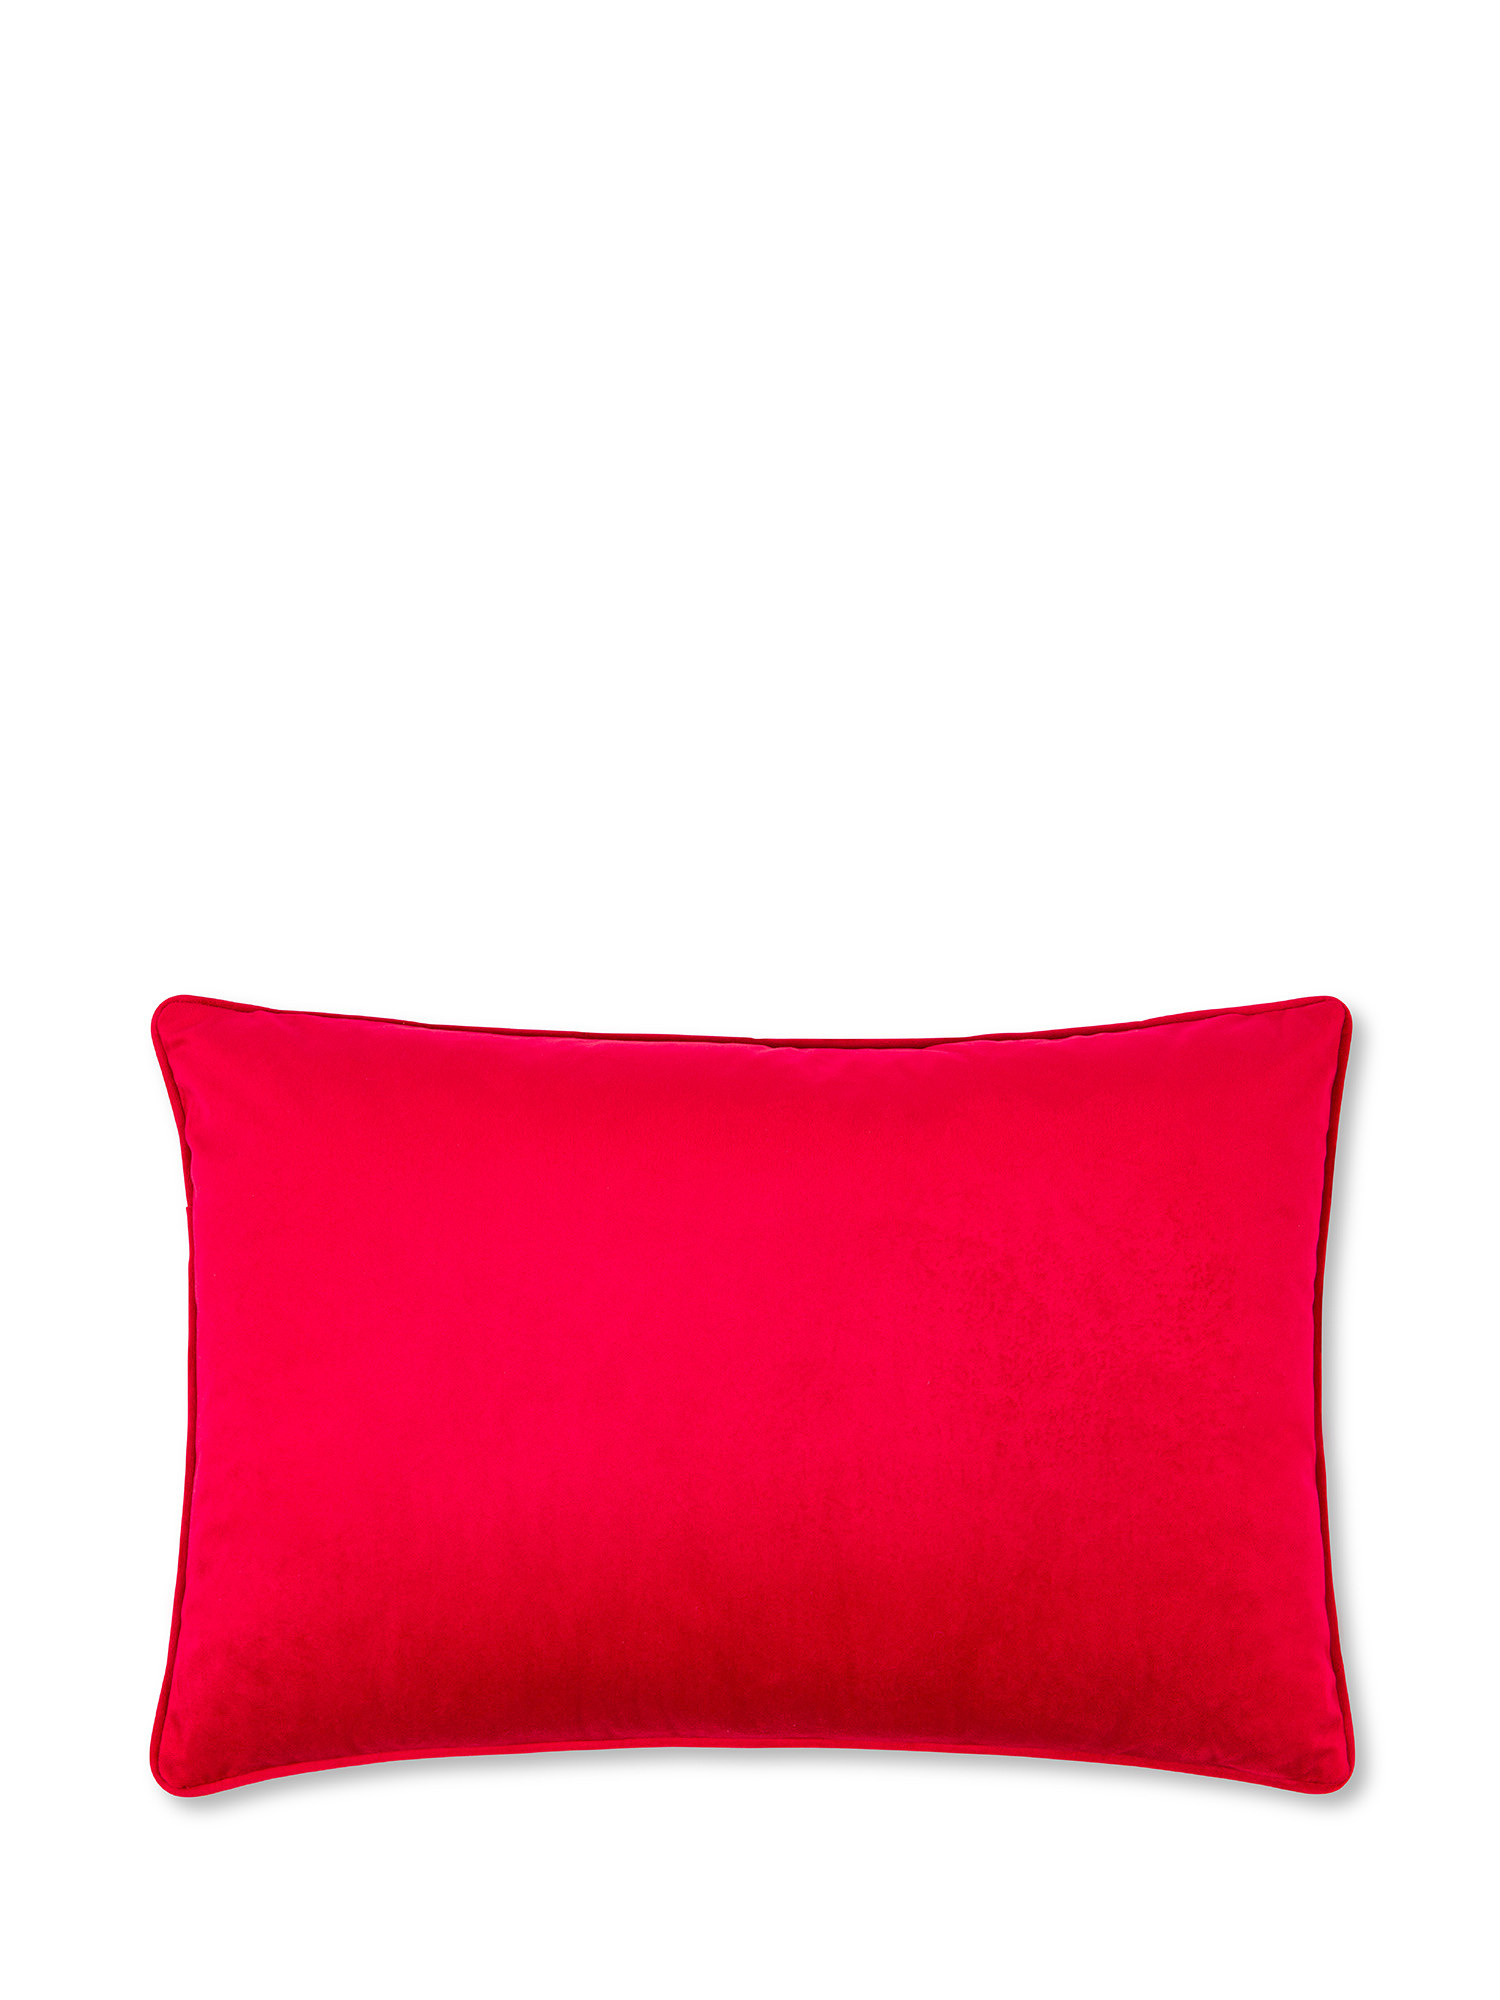 Velvet cushion 40x60cm, Red, large image number 0